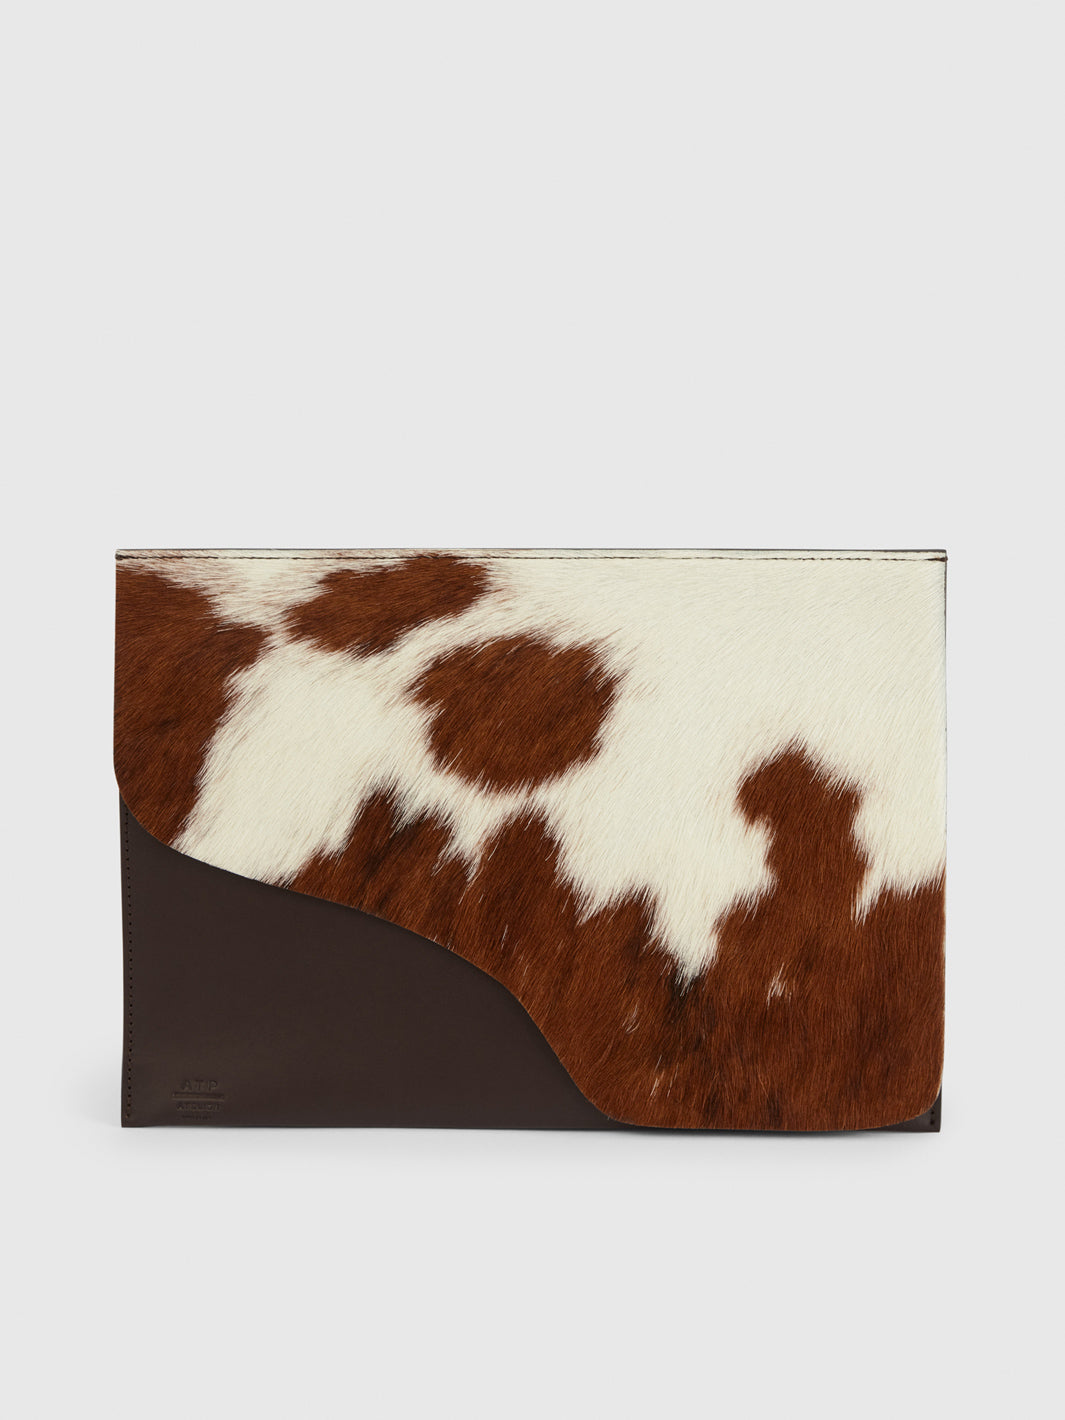 Sardegna Media Unique/Walnut Cow Print/Leather Laptop case